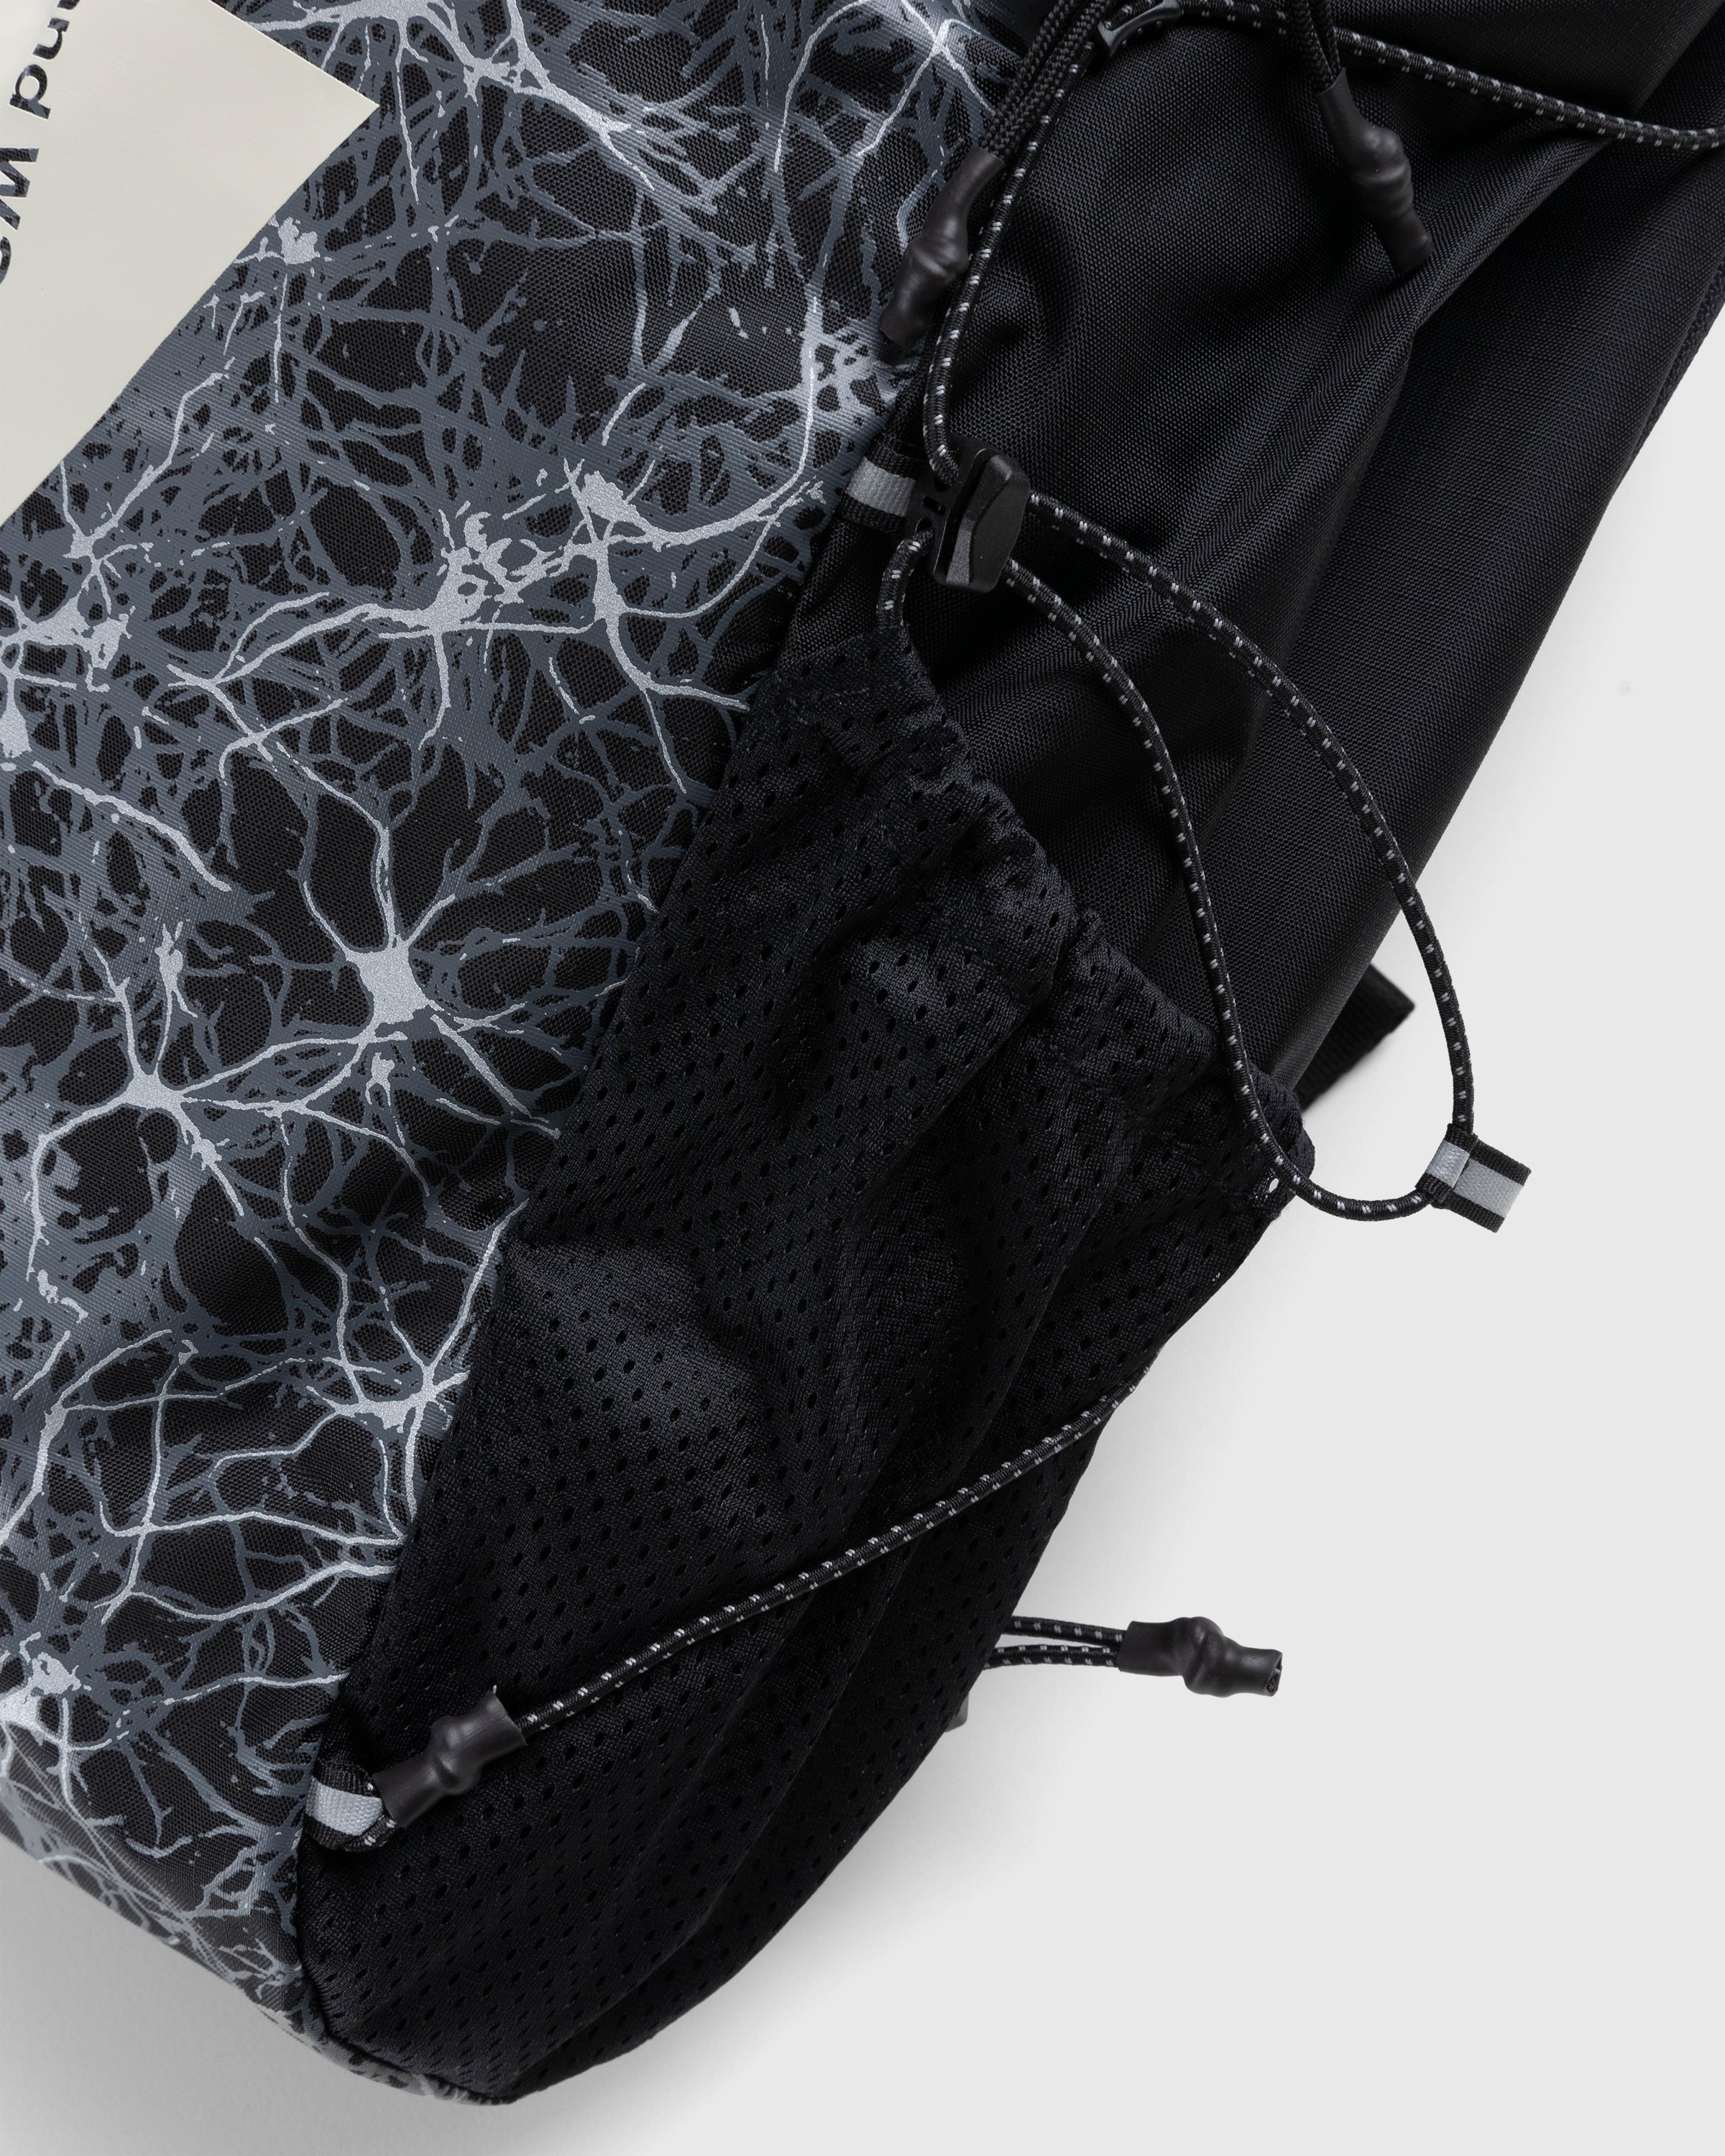 Adidas x And Wander - TERREX Hiking Backpack Black/Grey - Accessories - Black - Image 6